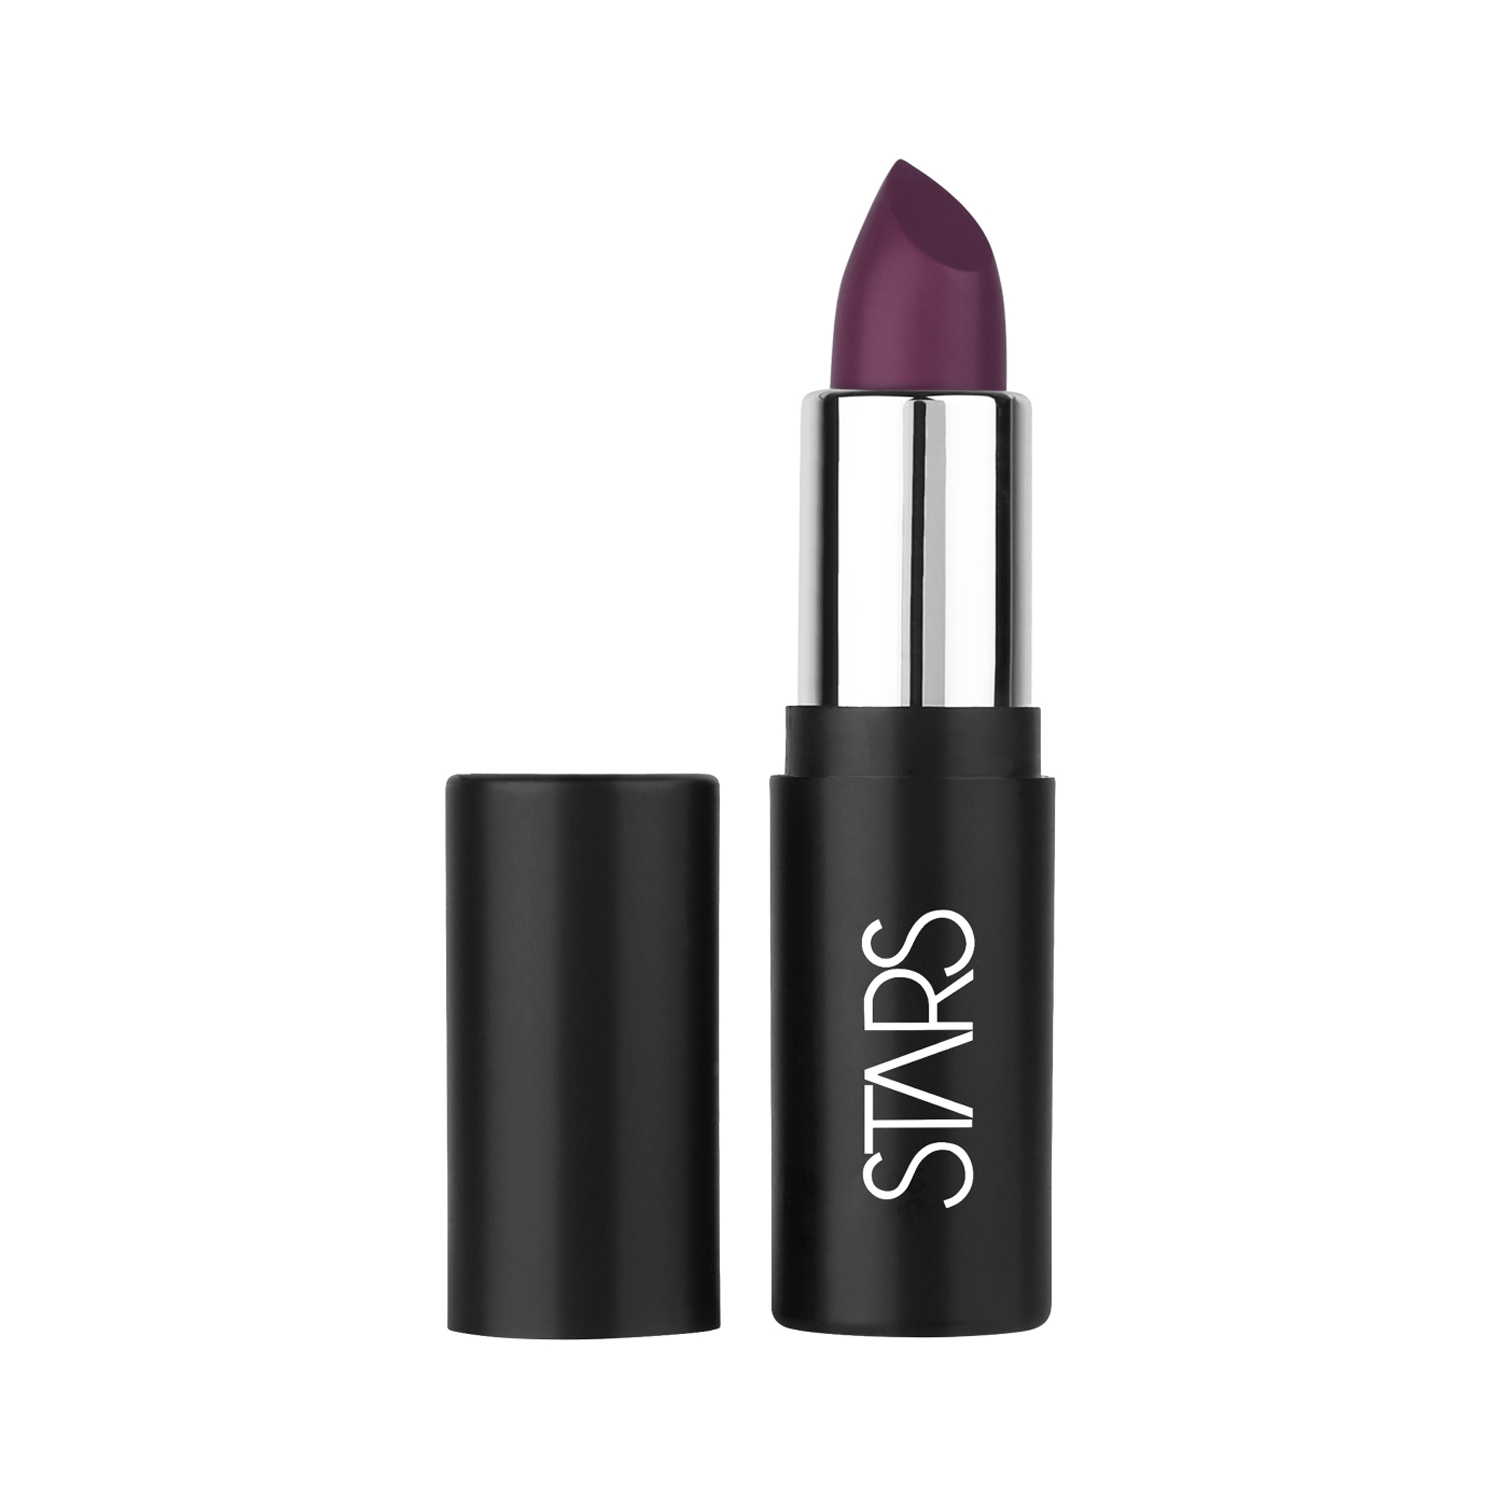 Stars Cosmetics Lush Lips Soft Creamy Lipstick - 12 Plum (4.2g)